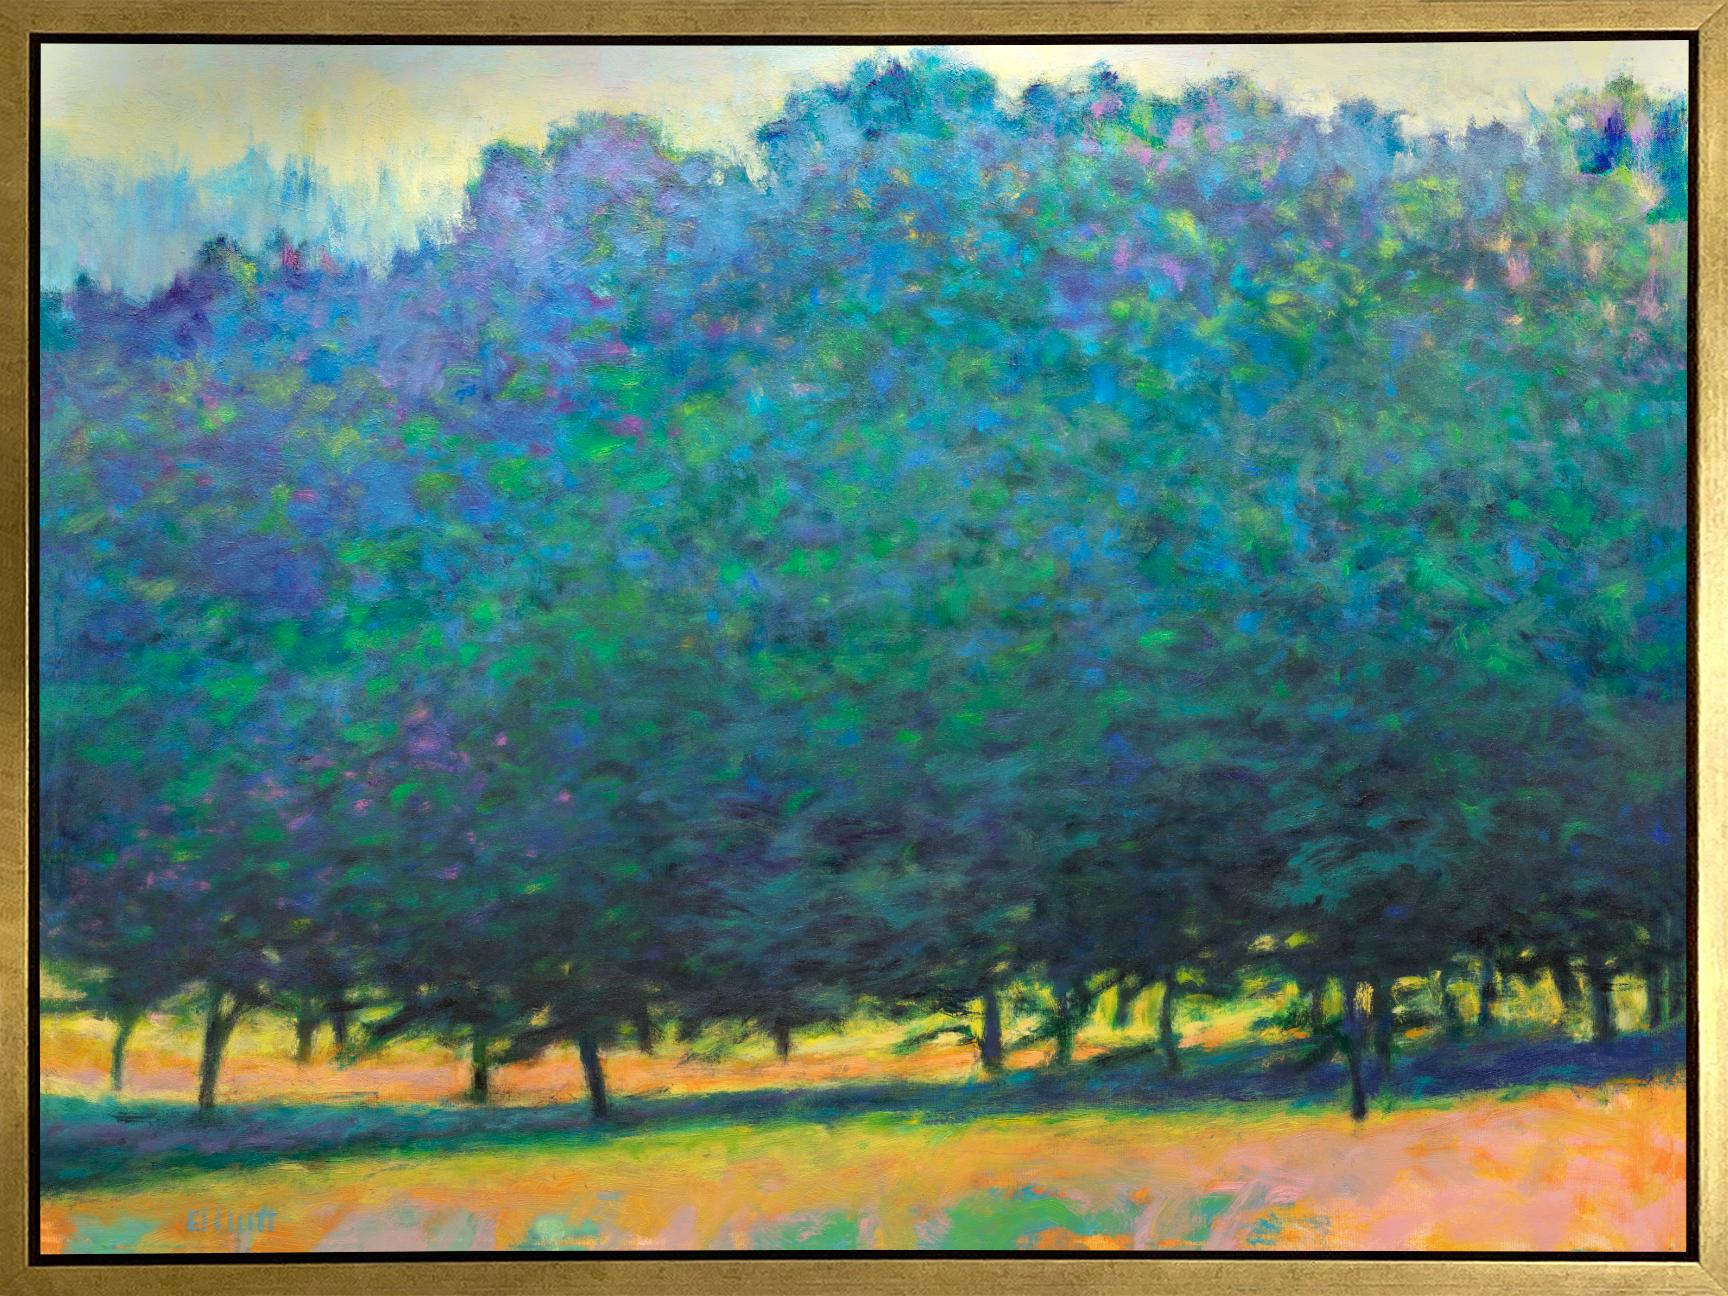 Ken Elliott Landscape Print - "Greens Moving Across, " Framed Limited Edition Giclee Print, 18" x 24"